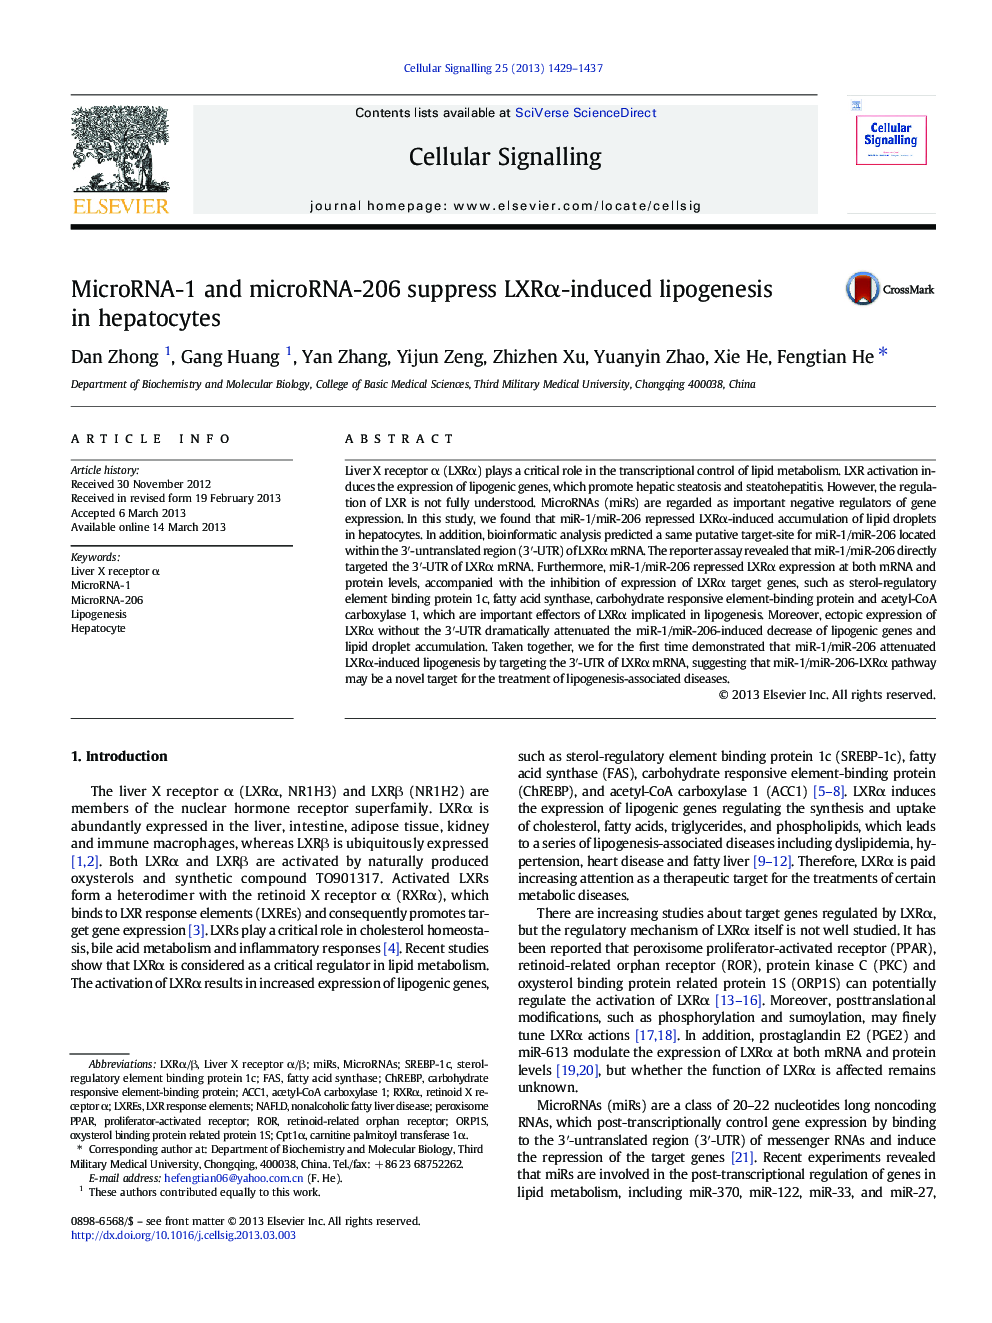 MicroRNA-1 and microRNA-206 suppress LXRÎ±-induced lipogenesis in hepatocytes